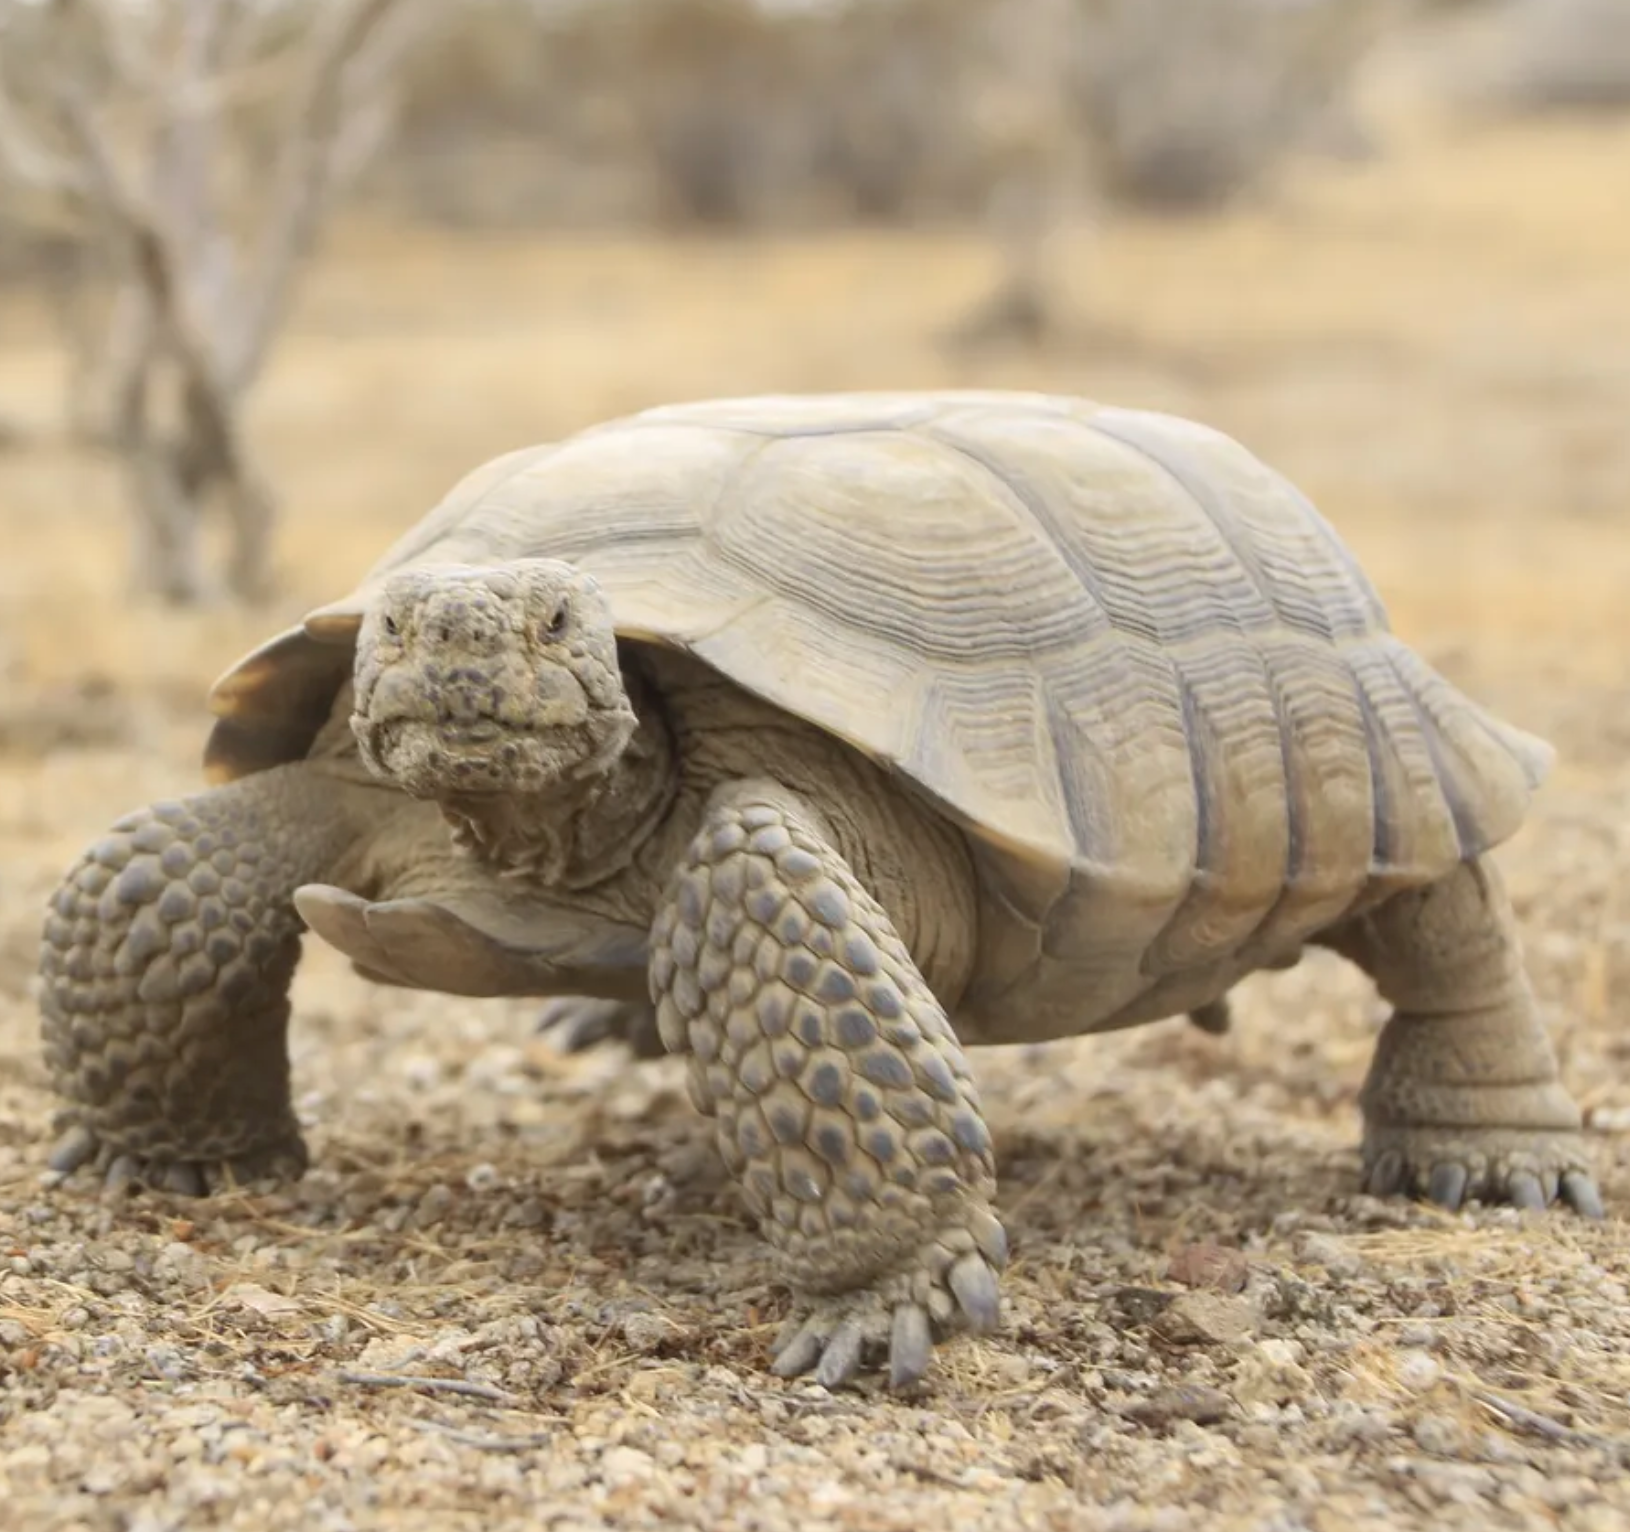 S1E21: The Desert Tortoise Still Has a Chance